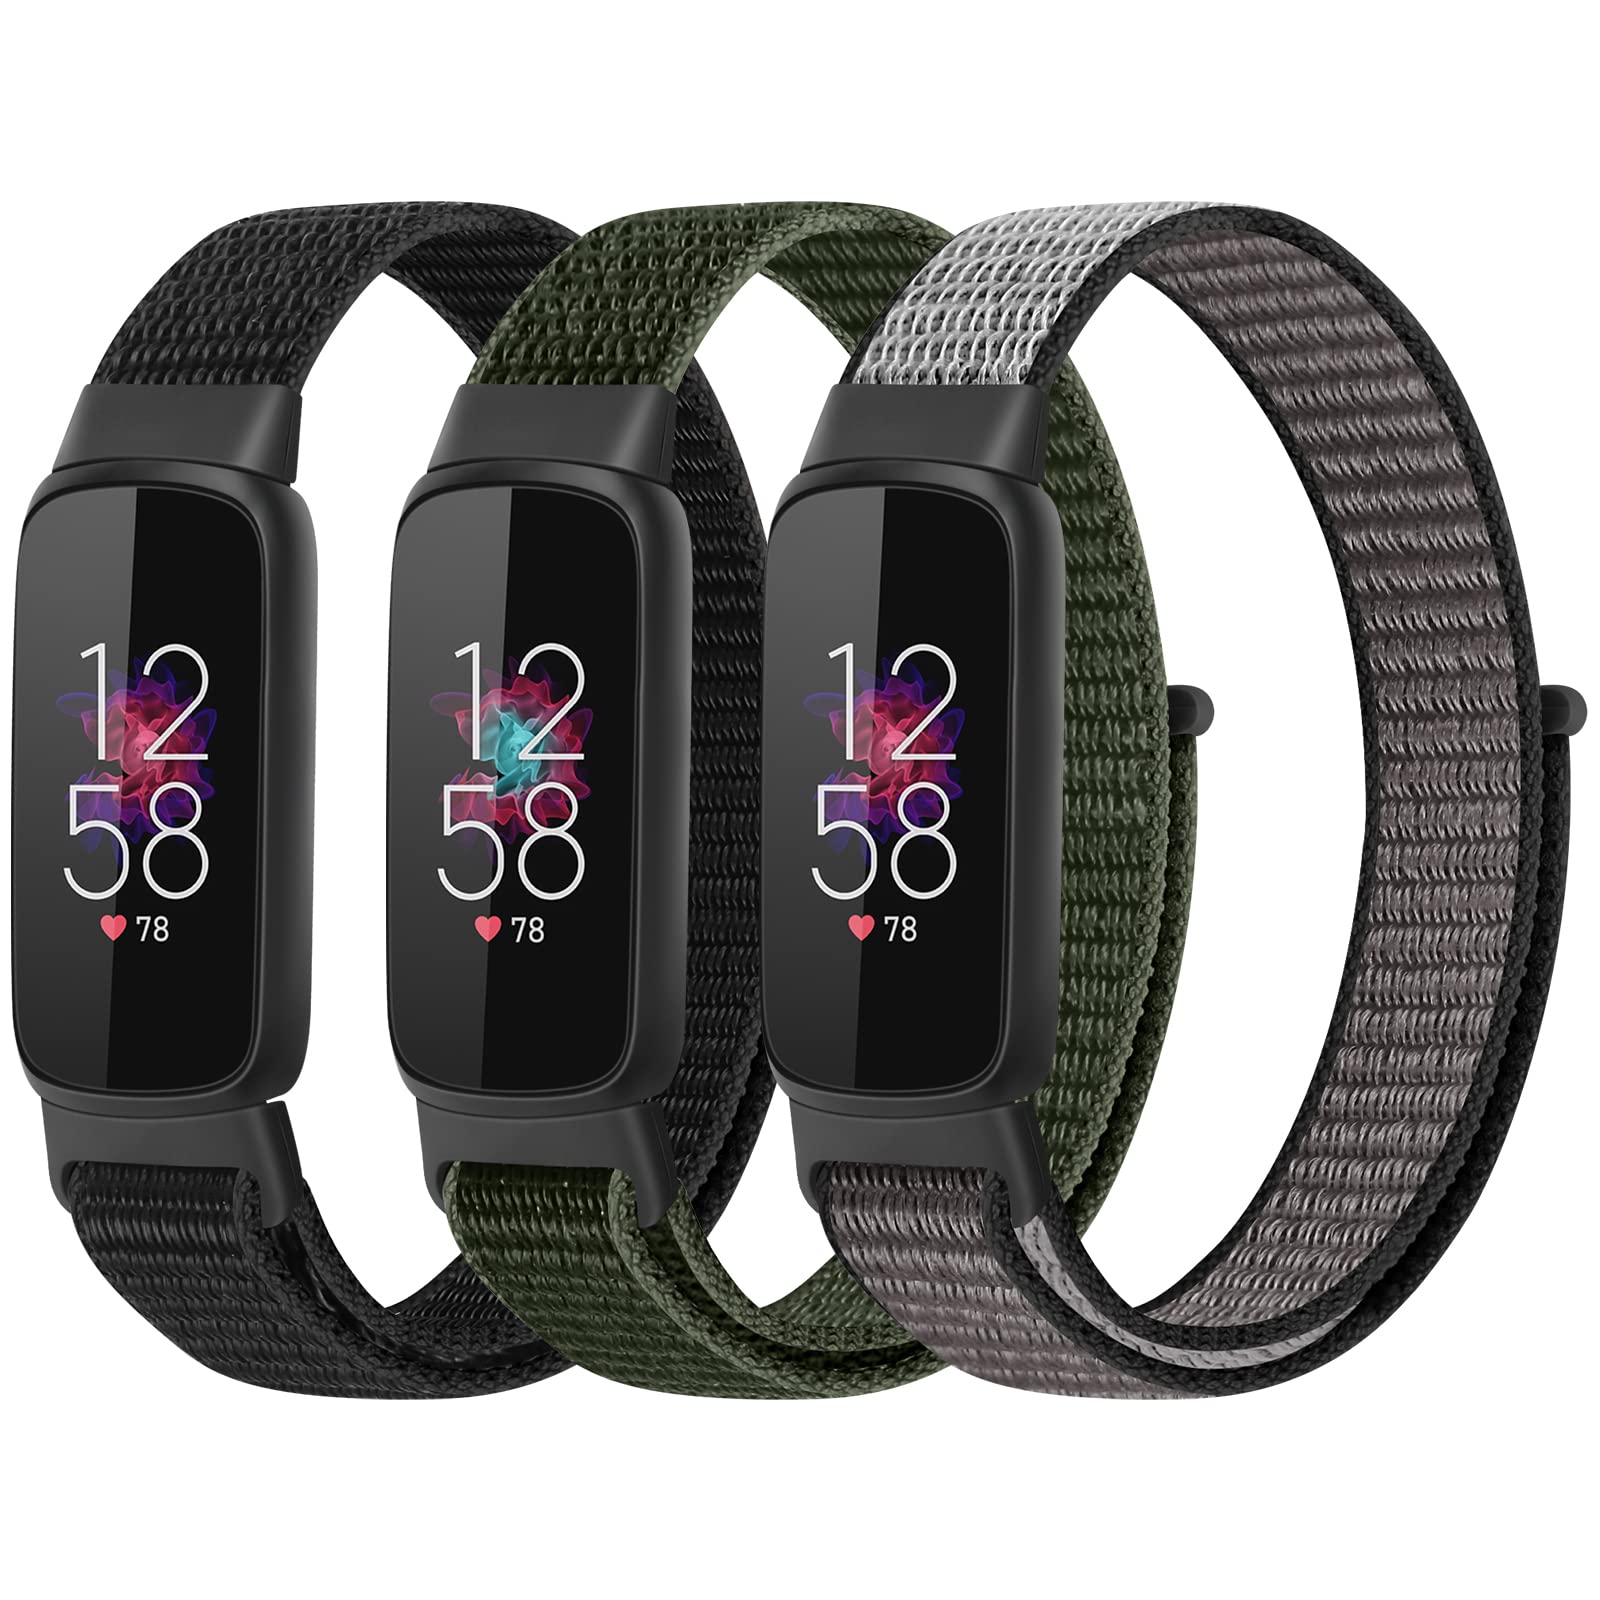 Fitbit Luxe Fitness & Wellness Tracker - Black/Black